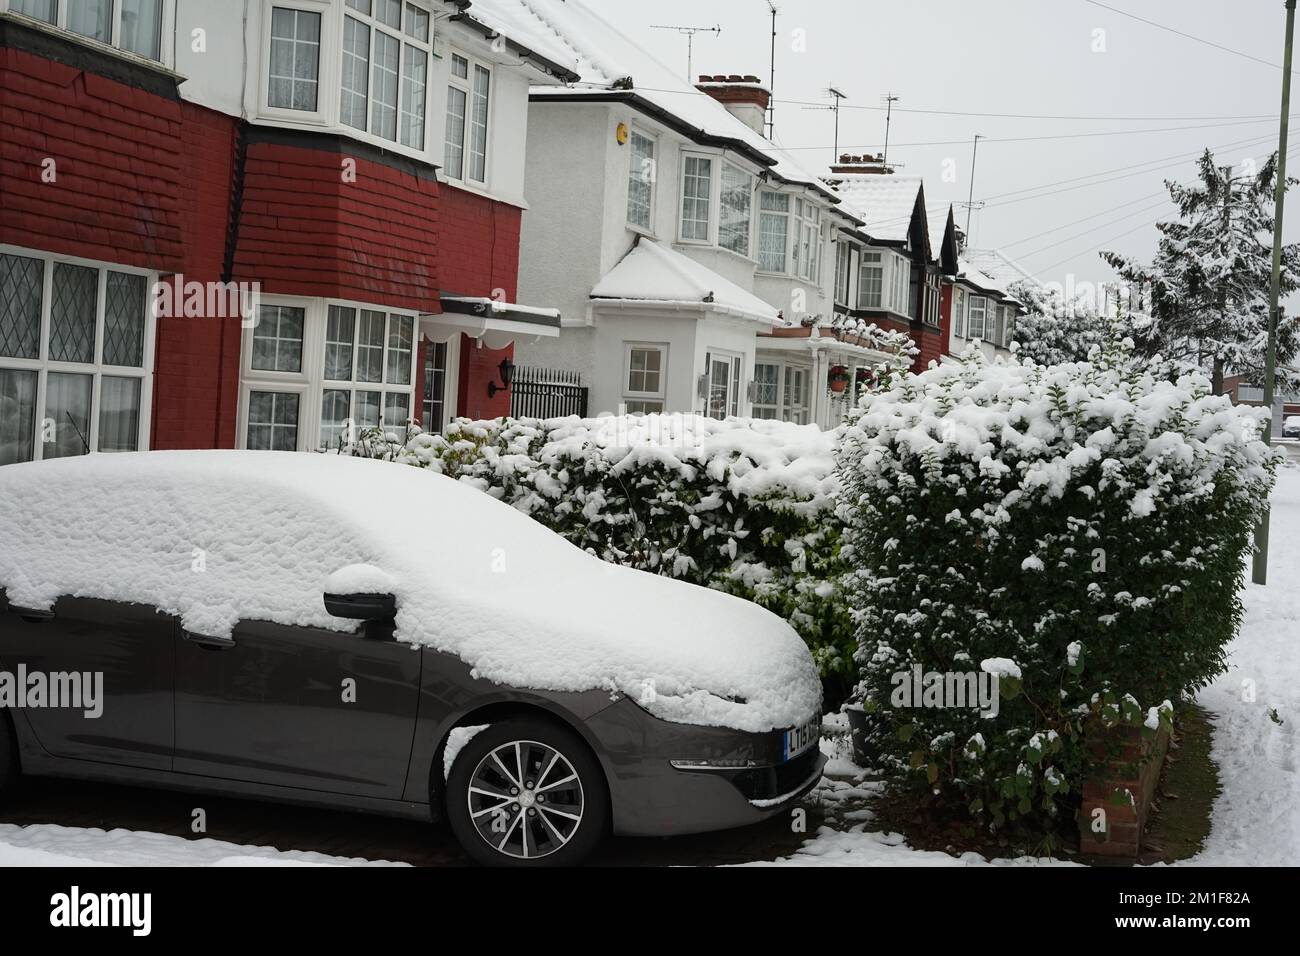 Une voiture enneigée à Greenway Gardens, Barnett, Colindale, Londres, Angleterre, ROYAUME-UNI Banque D'Images